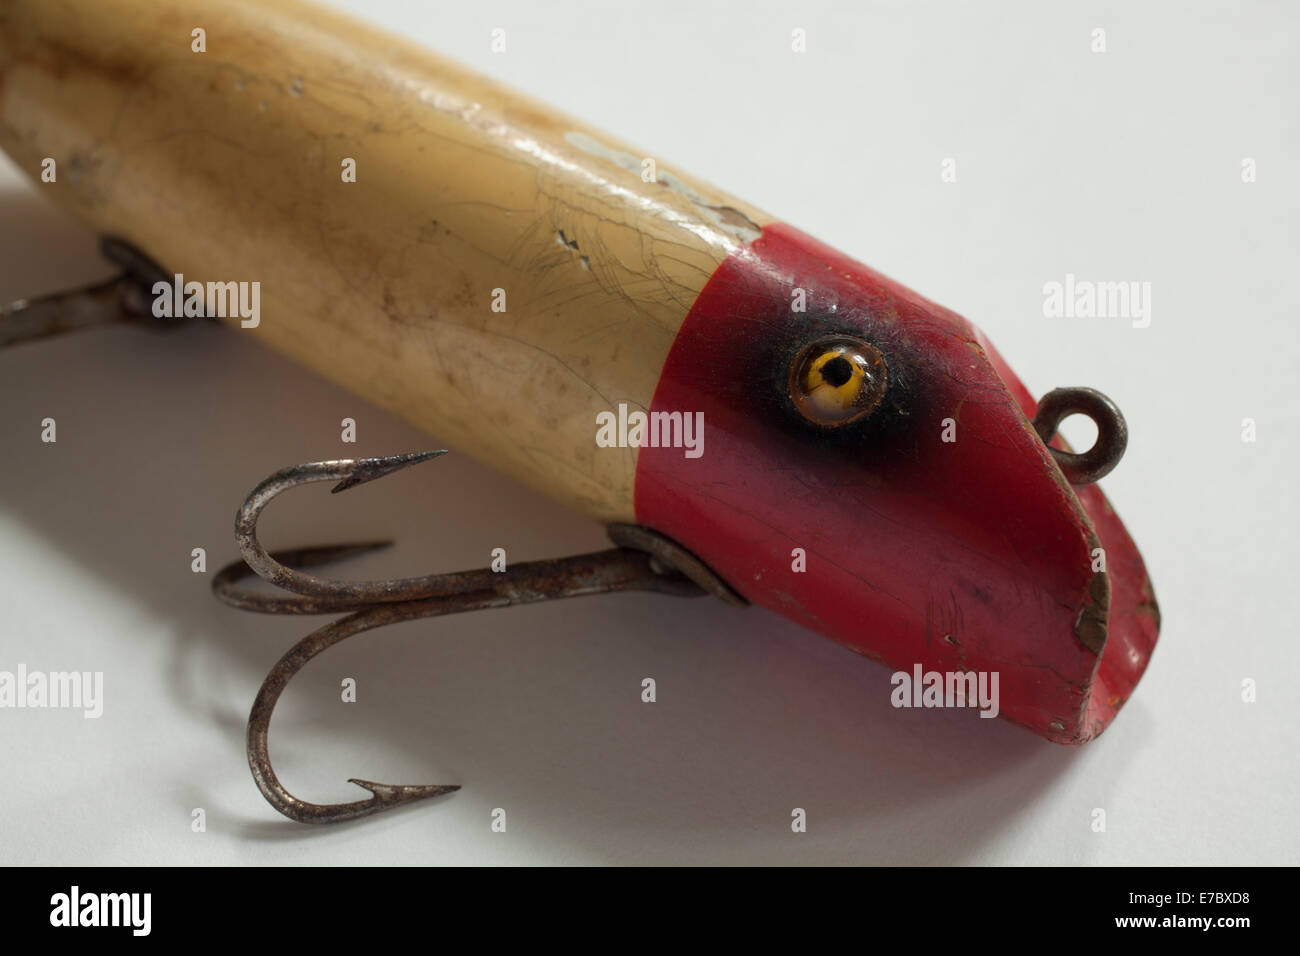 Vintage fishing lure closeup Stock Photo - Alamy